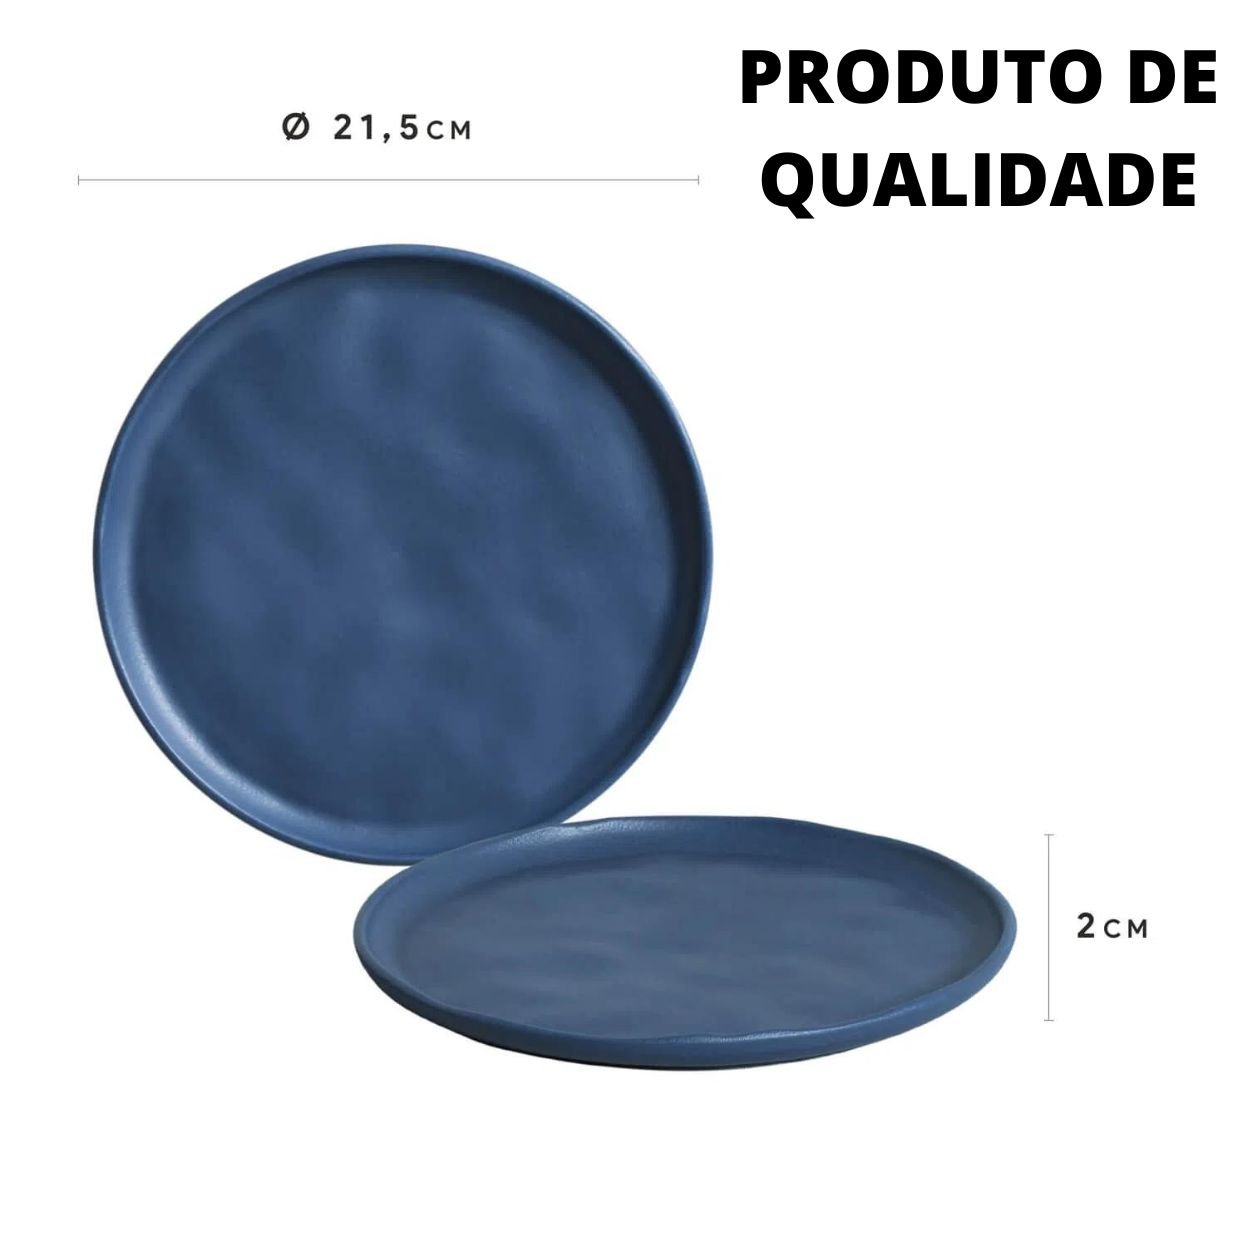 Prato Sobremesa Azul Boreal Neo Stoneware Porto Brasil Hyggie - 2